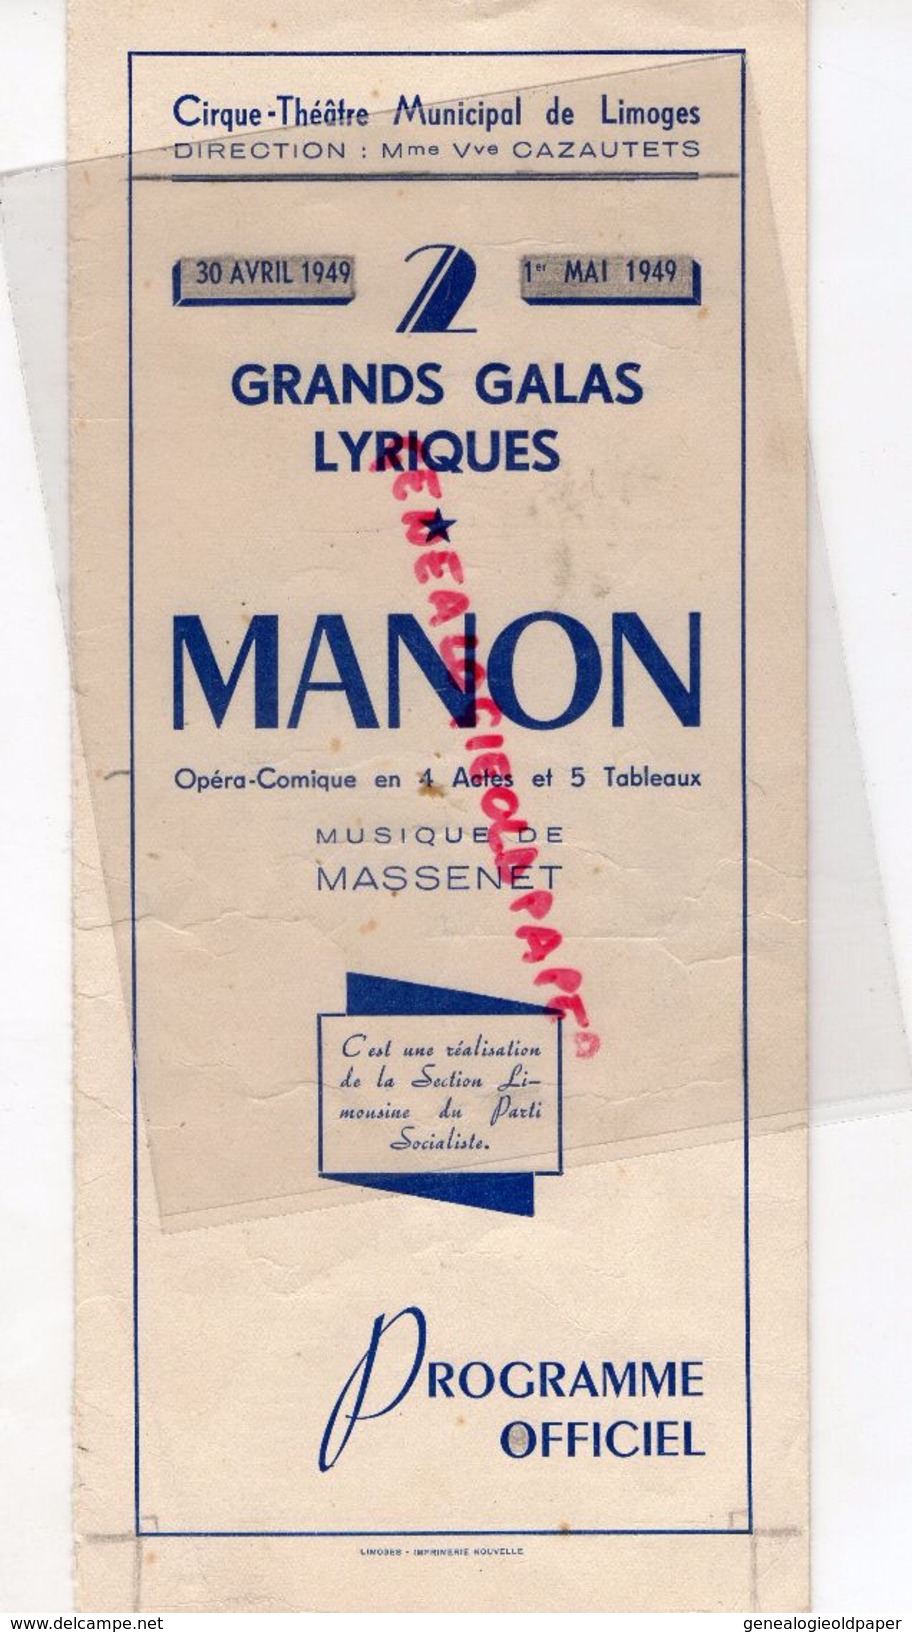 87 -LIMOGES- PROGRAMME CIRQUE THEATRE-30 AVRIL -1 MAI 1949-MANON MASSENET-RENEE TARN-JOSE MALLABRERA-MARIO FRANZINI - Programs